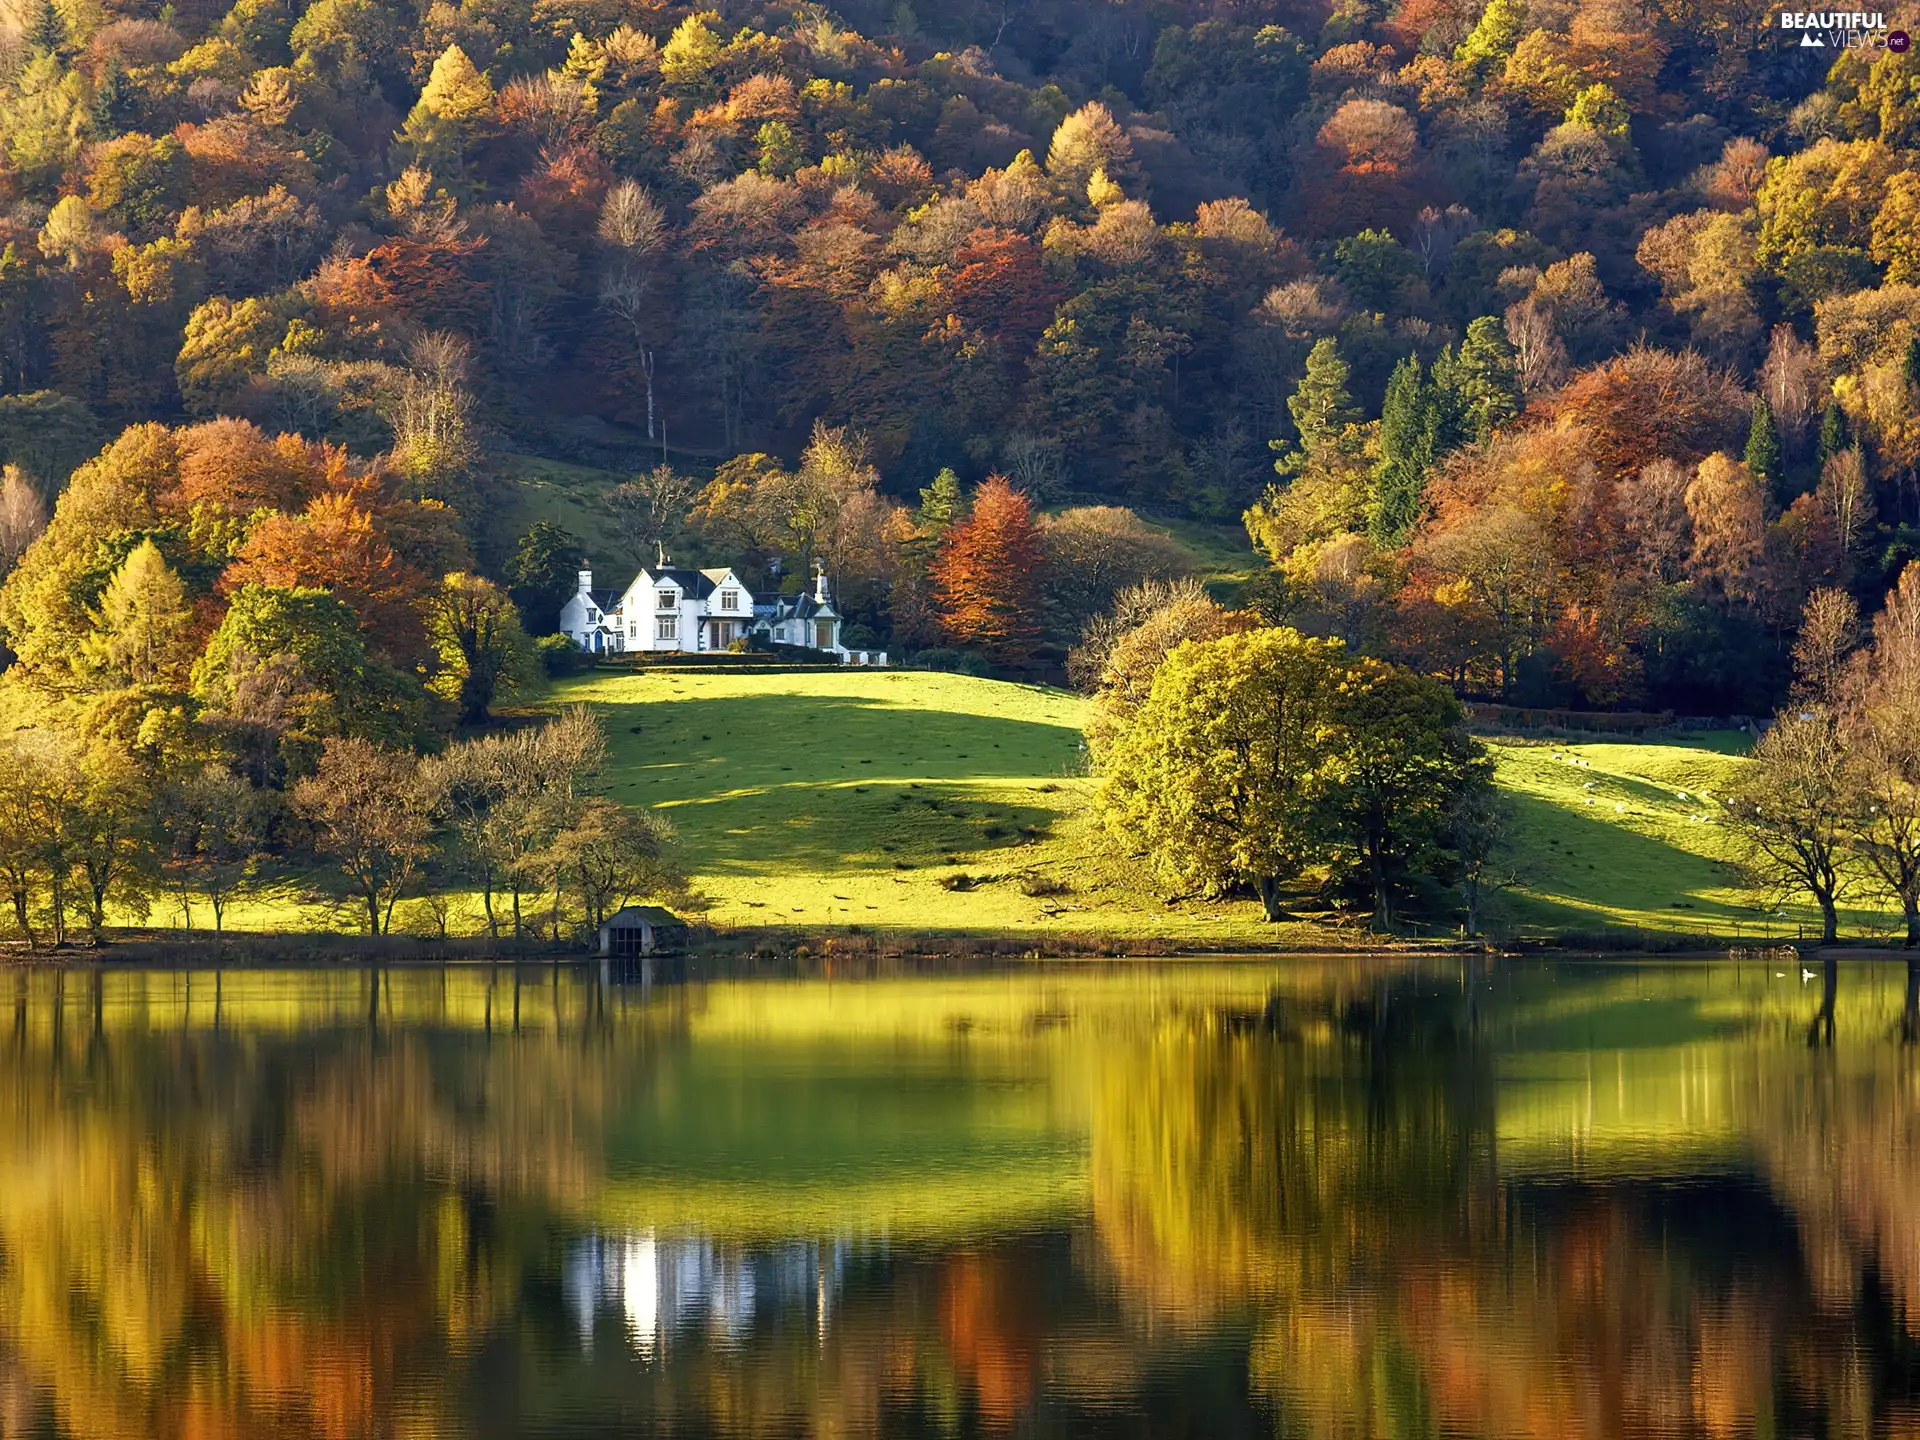 viewes, autumn, White, Home, lake, trees